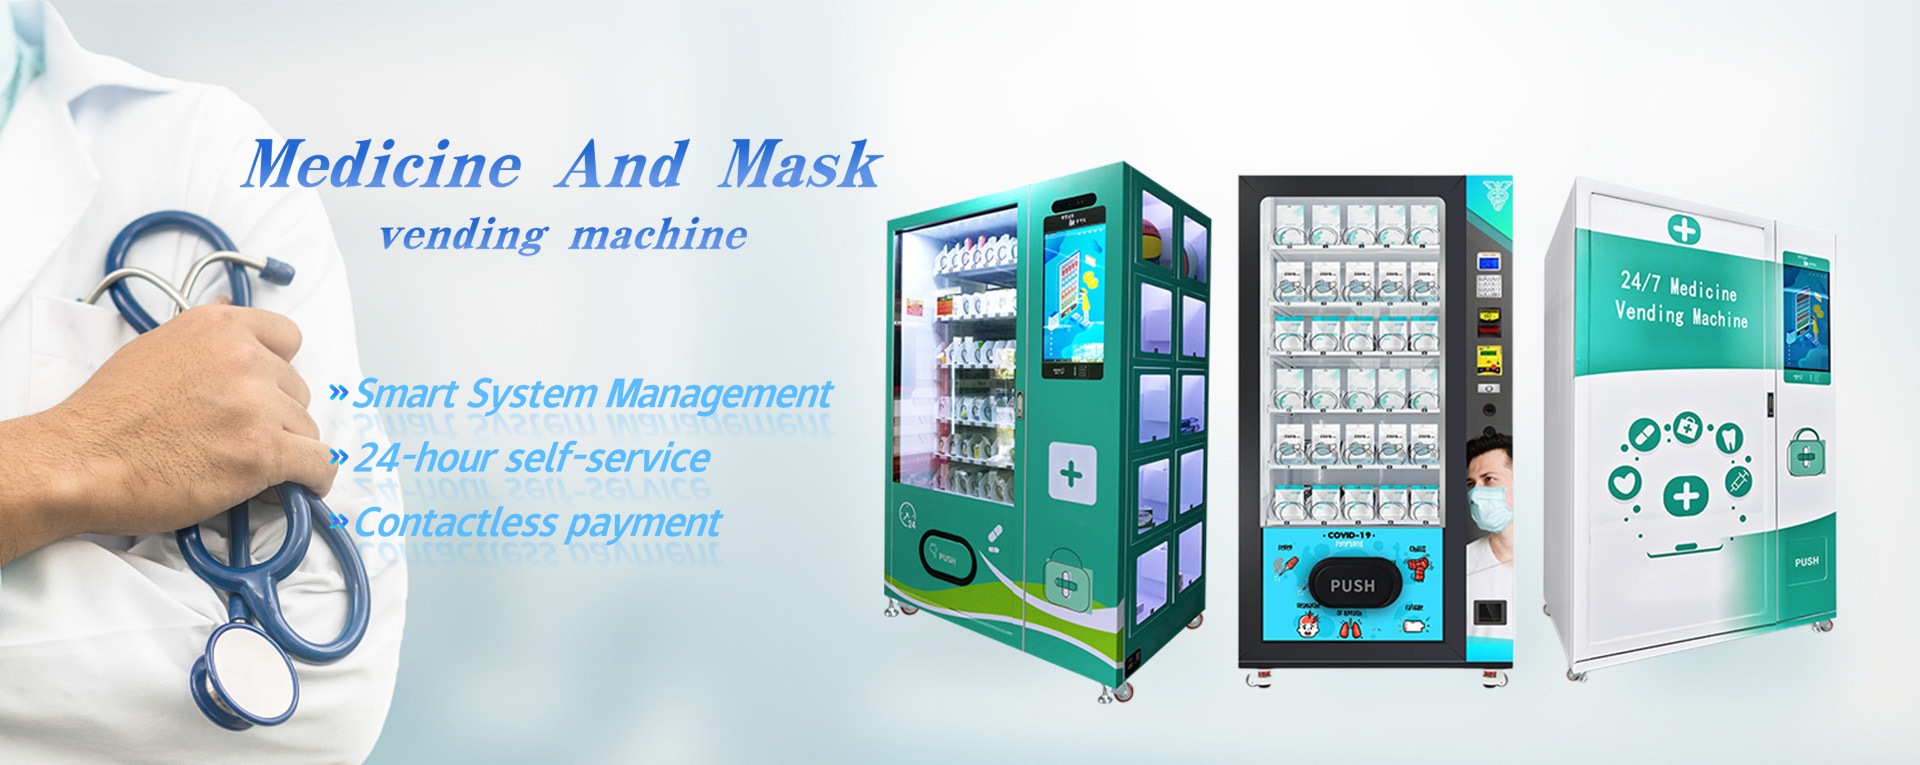 24-hour medicine vending machines in public places